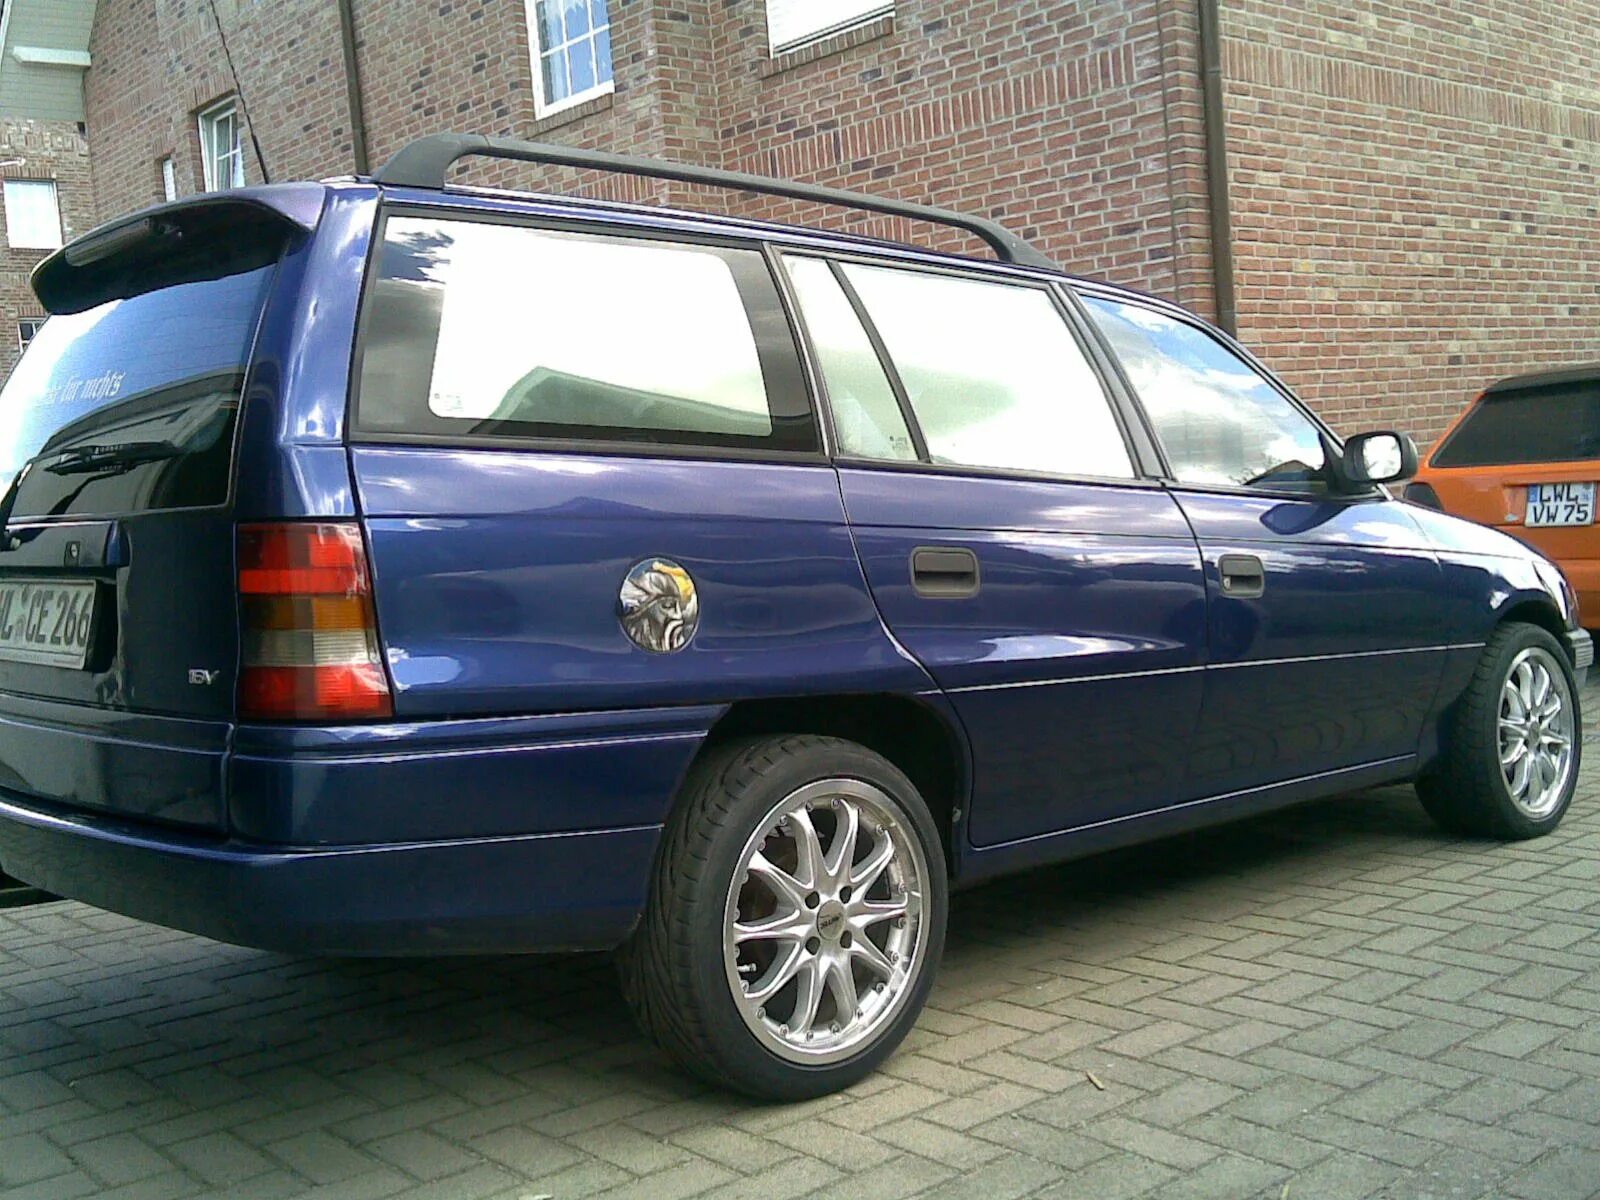 Opel Astra Caravan универсал 1997. Opel Astra f 1997 универсал. Колесо опель универсал